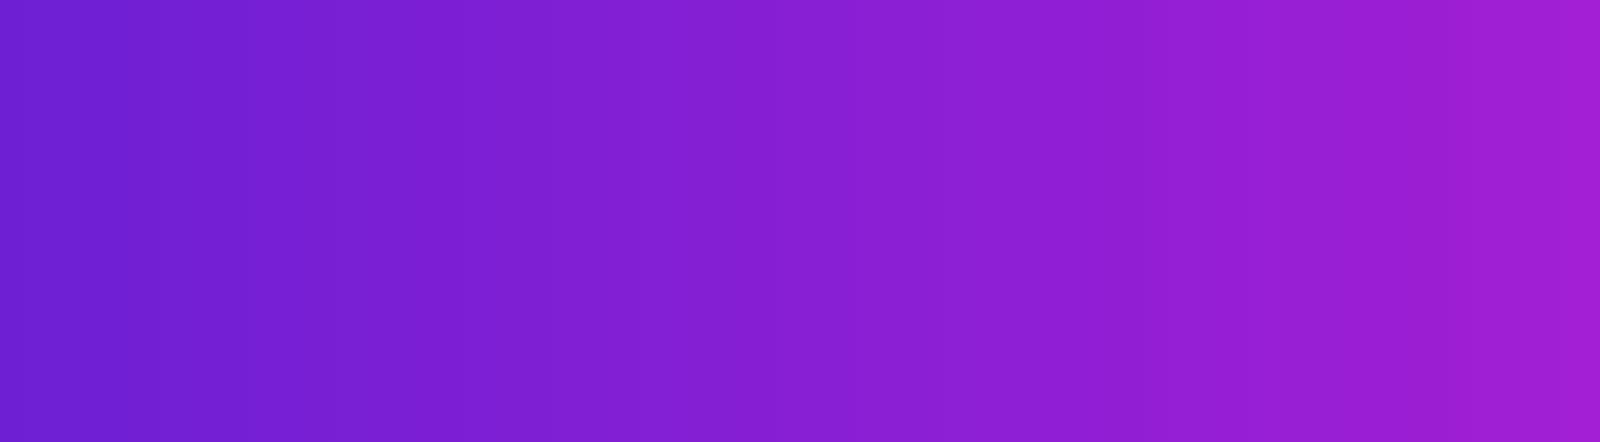 purple gradient texture